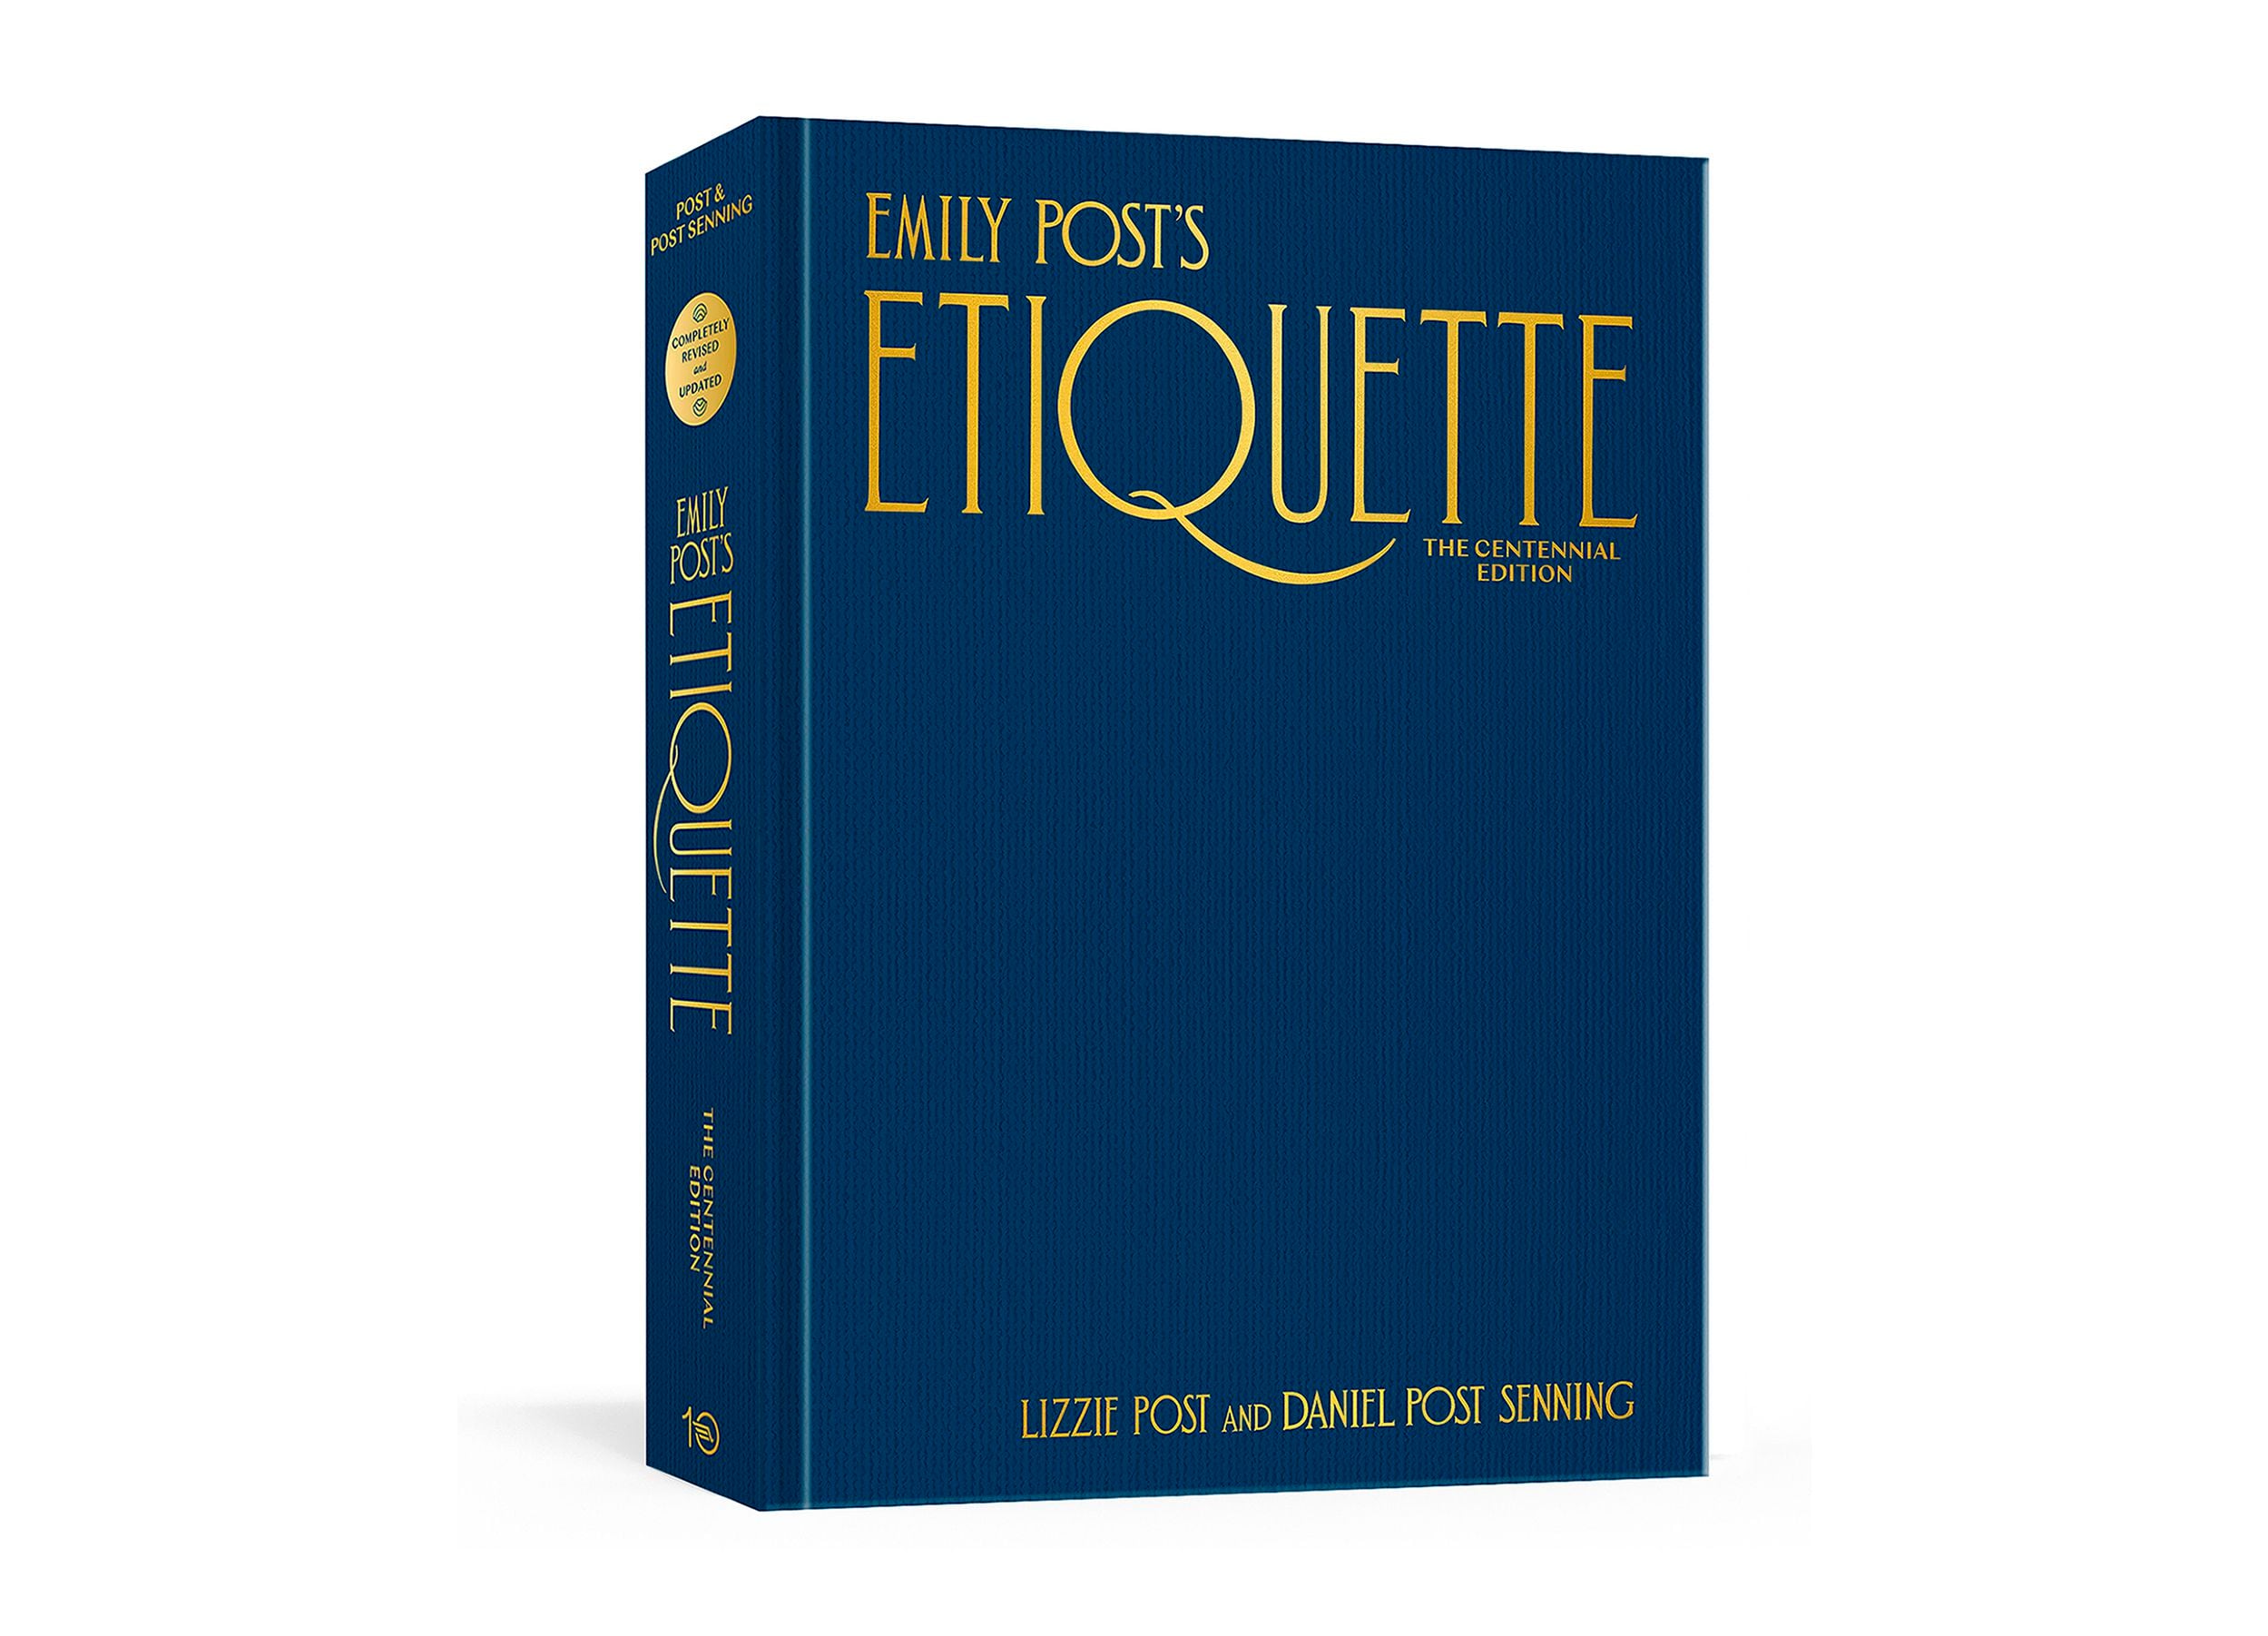 Emily Post’s etiquette tome overhauled for 21st century